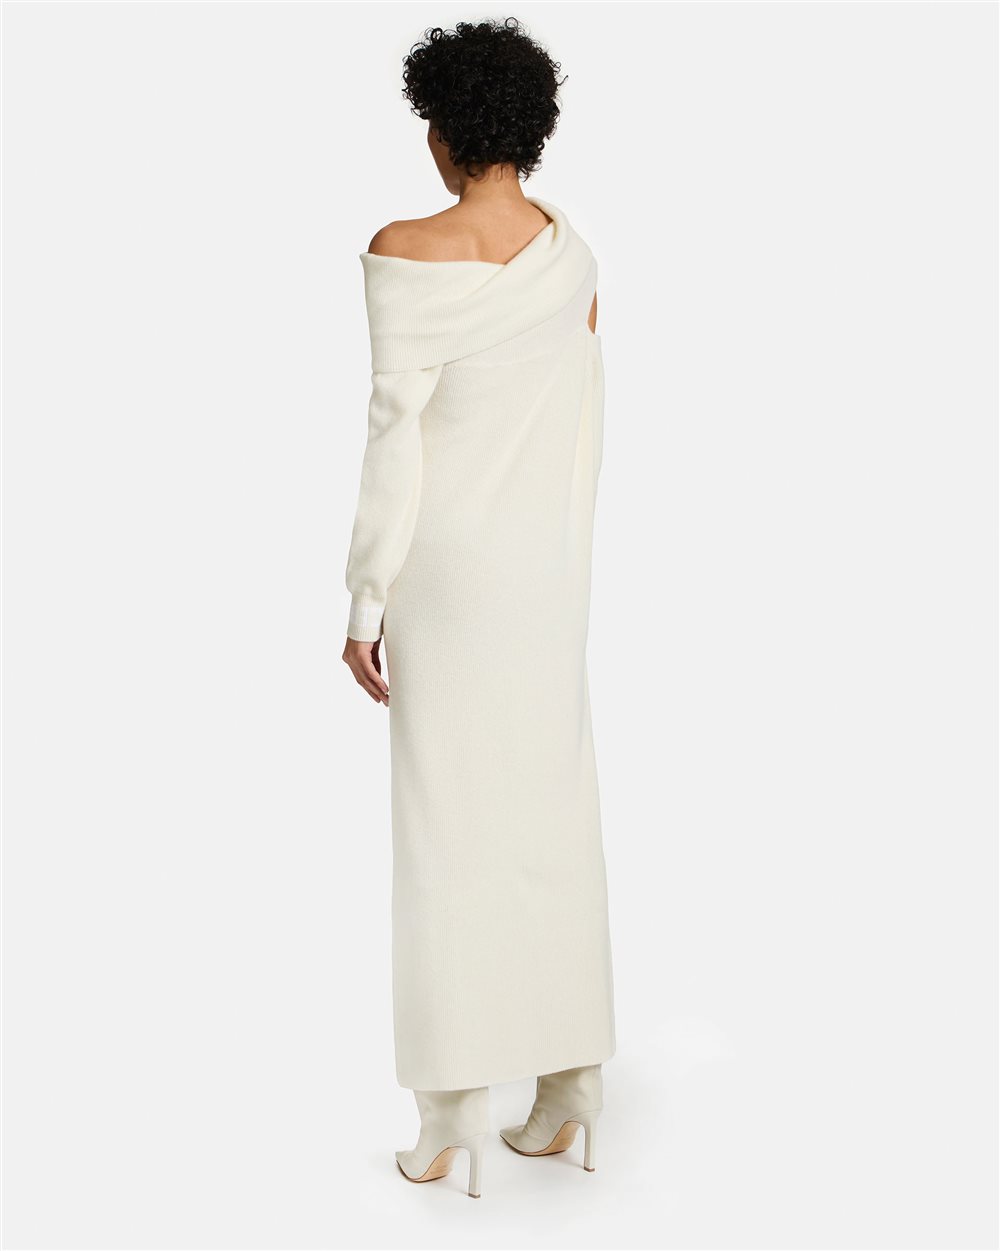 Wool pullover dress - Iceberg - Official Website